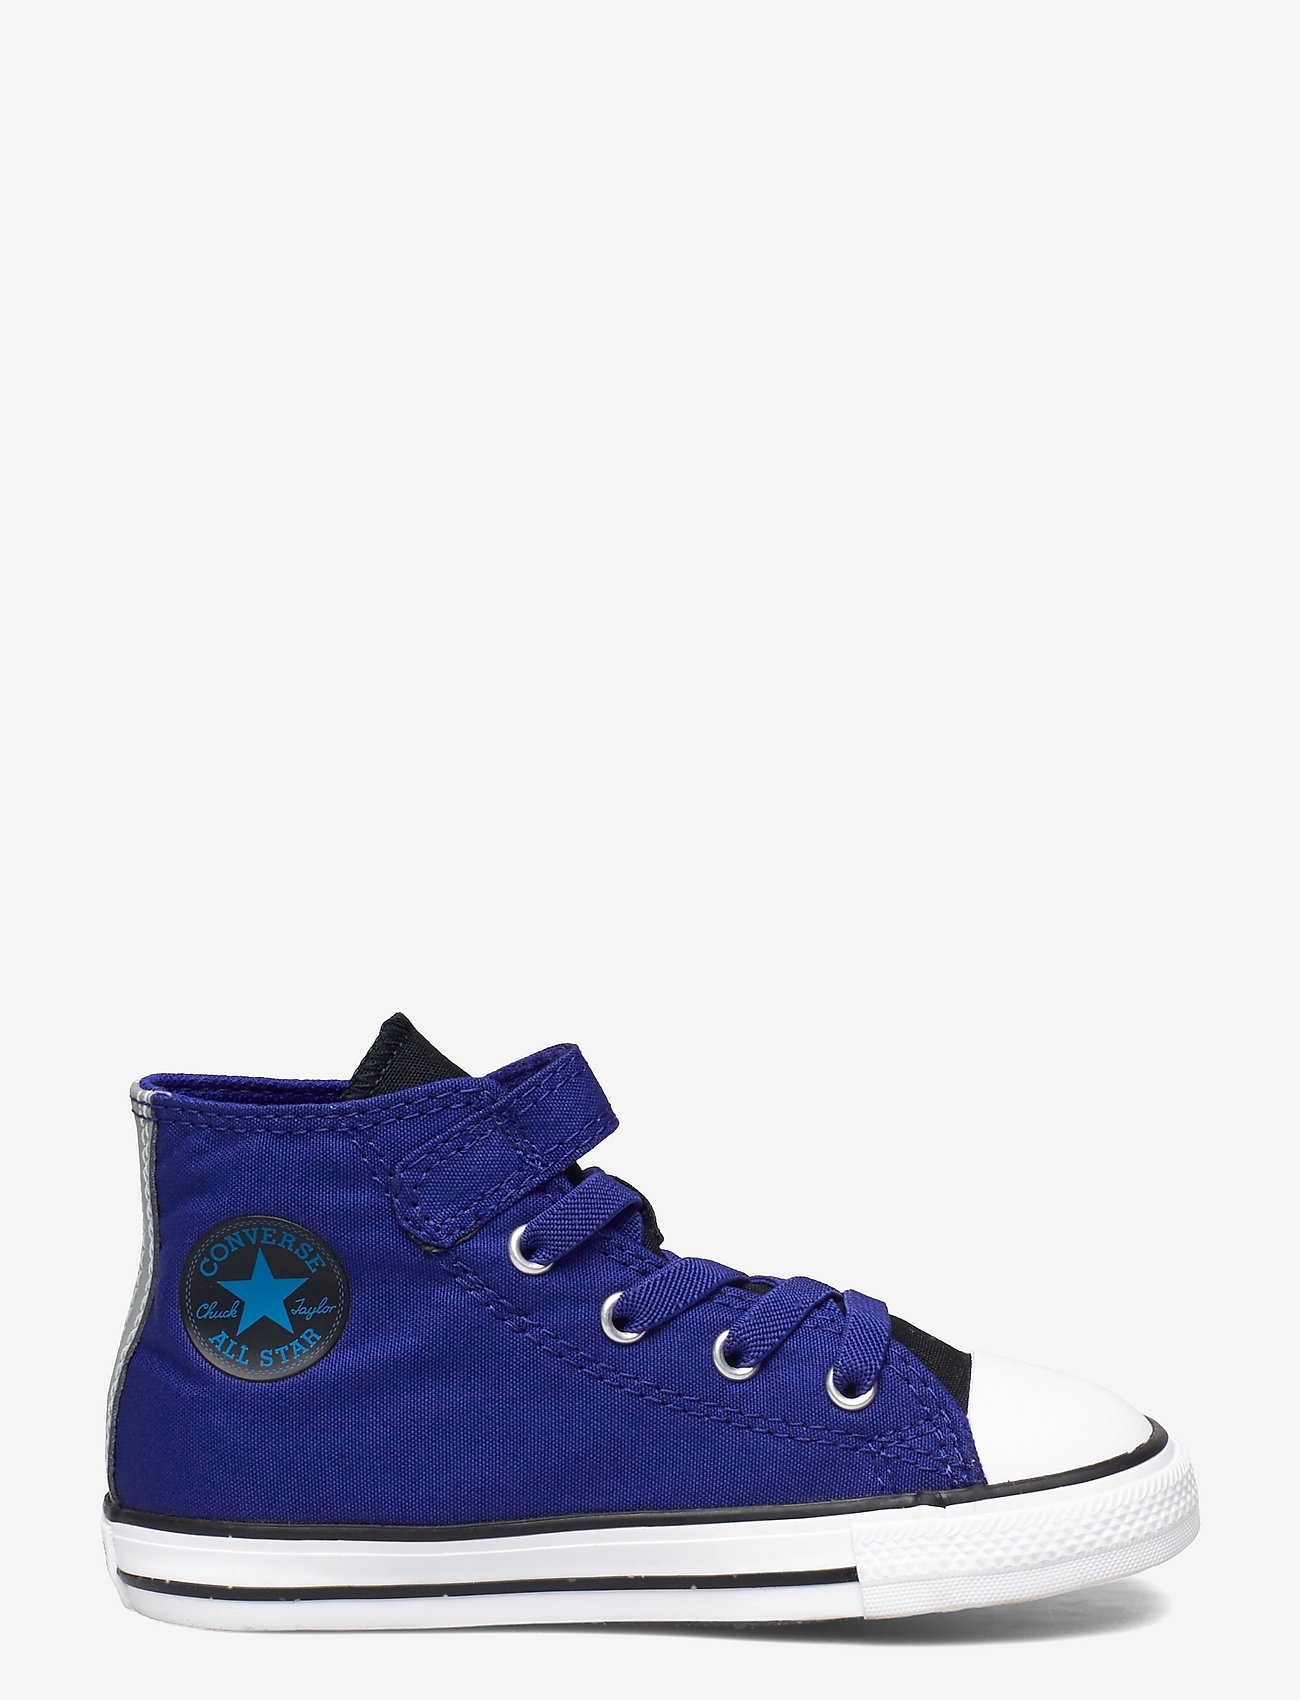 Converse - Chuck Taylor All Star 1V - canvas-sneaker - purple/blue - 1